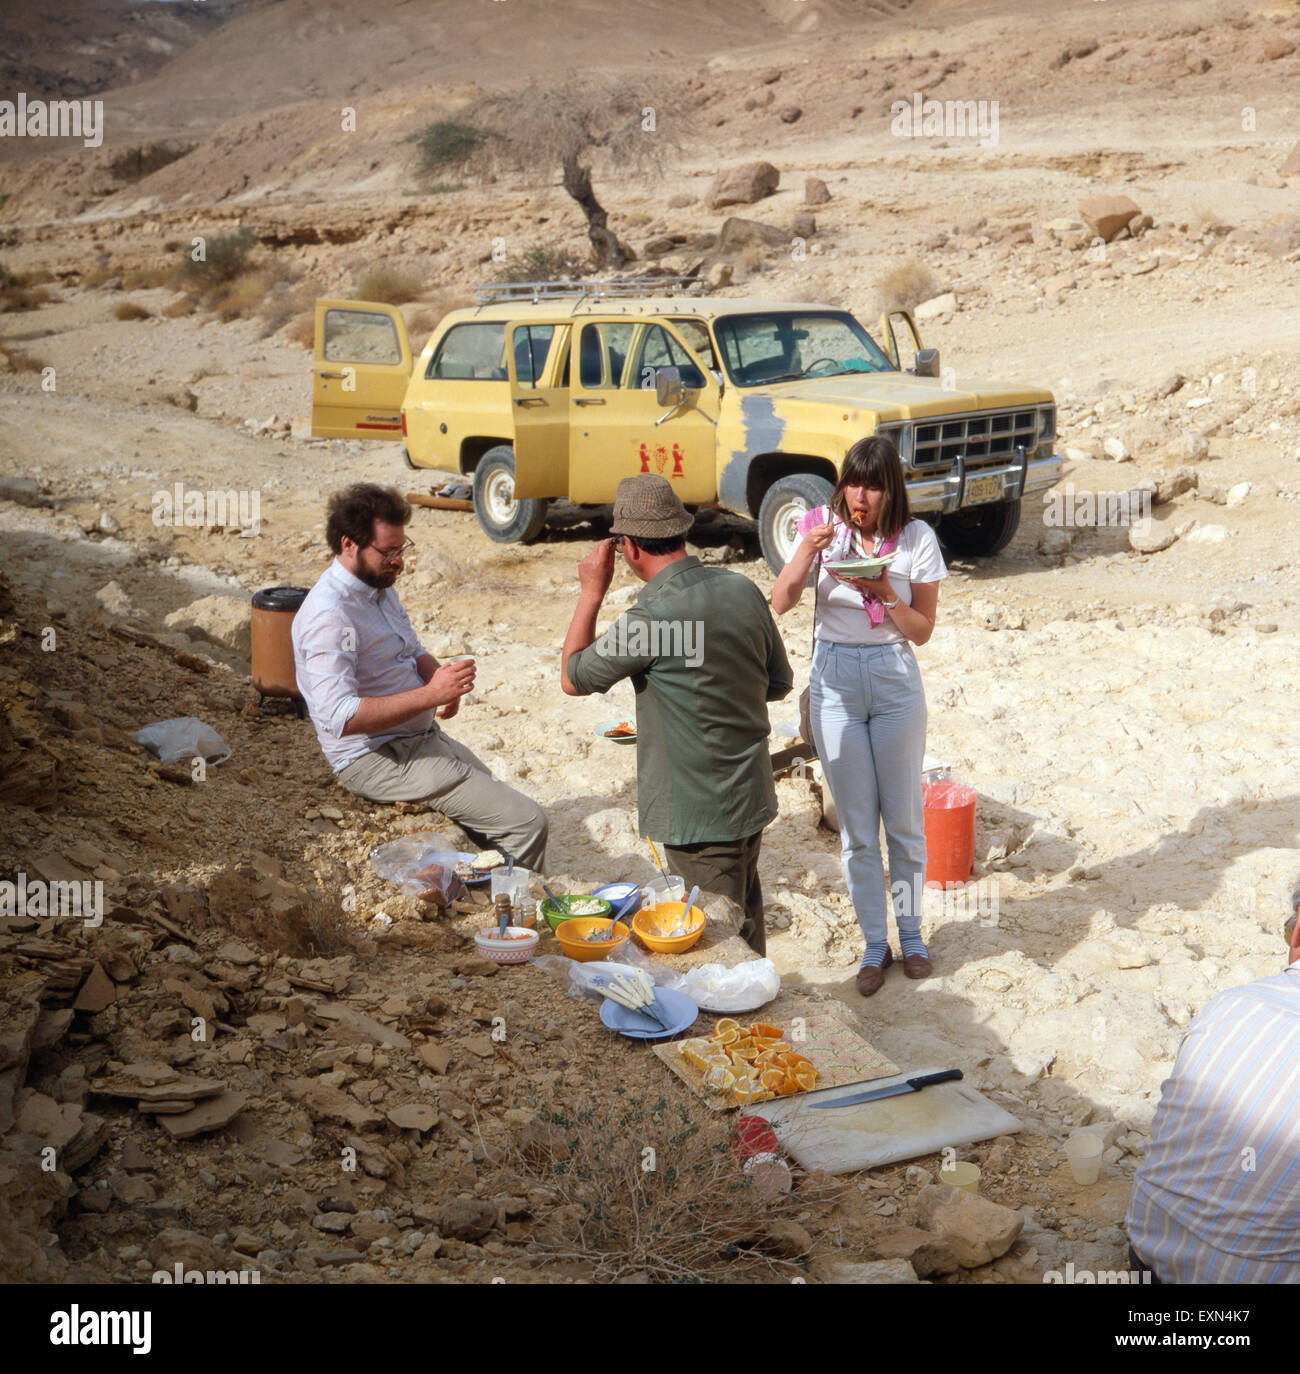 Eine Reise durch die Wüste Negev am Toten Meer, Israele 1980er Jahre. Viaggiando attraverso il deserto del Negev presso il Mar Morto, Israele degli anni ottanta. Foto Stock